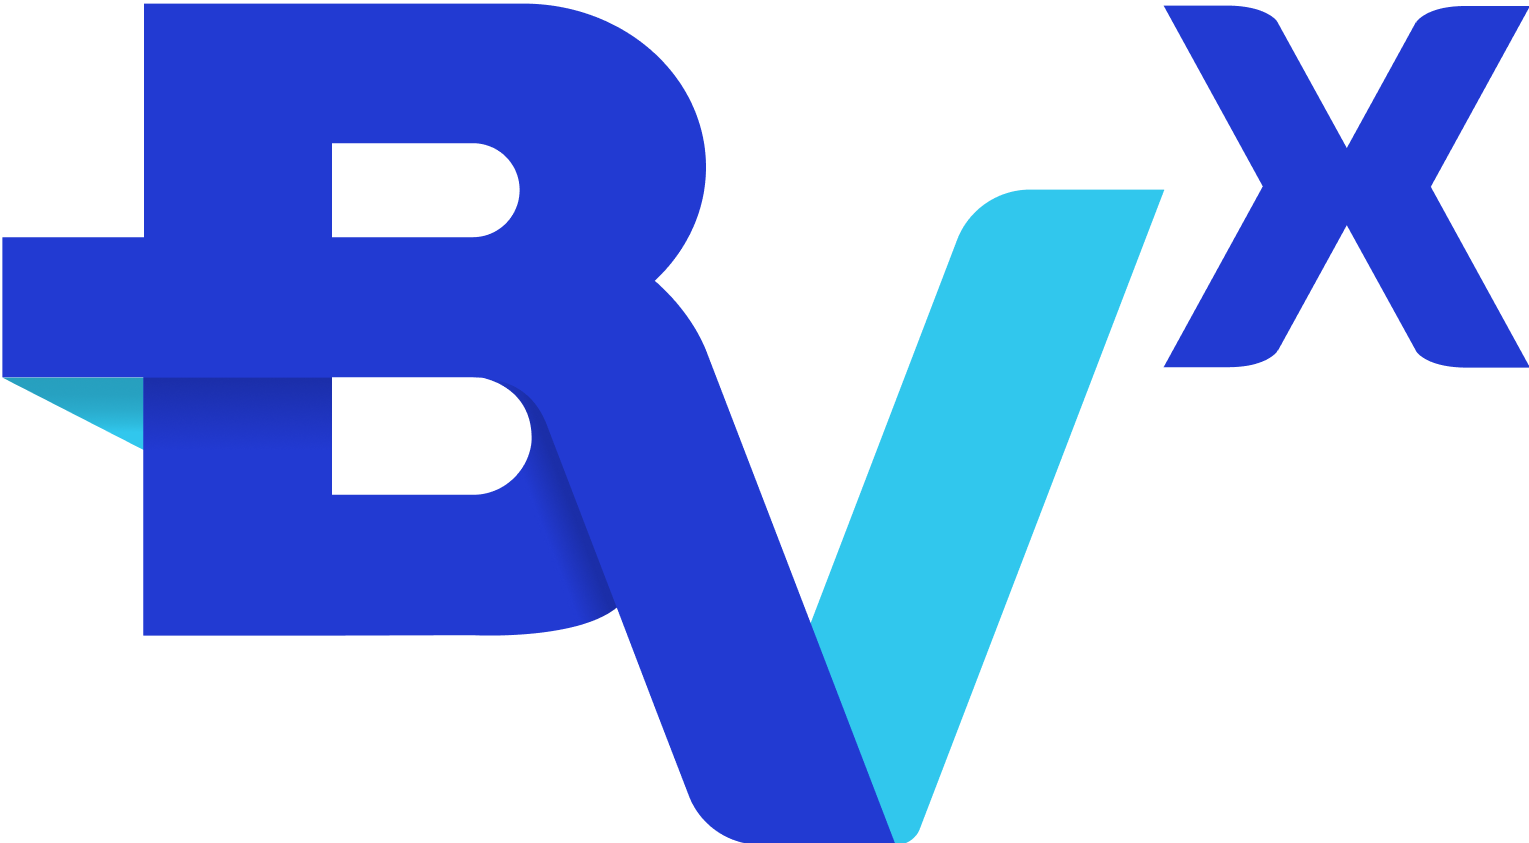 BVx_Principal